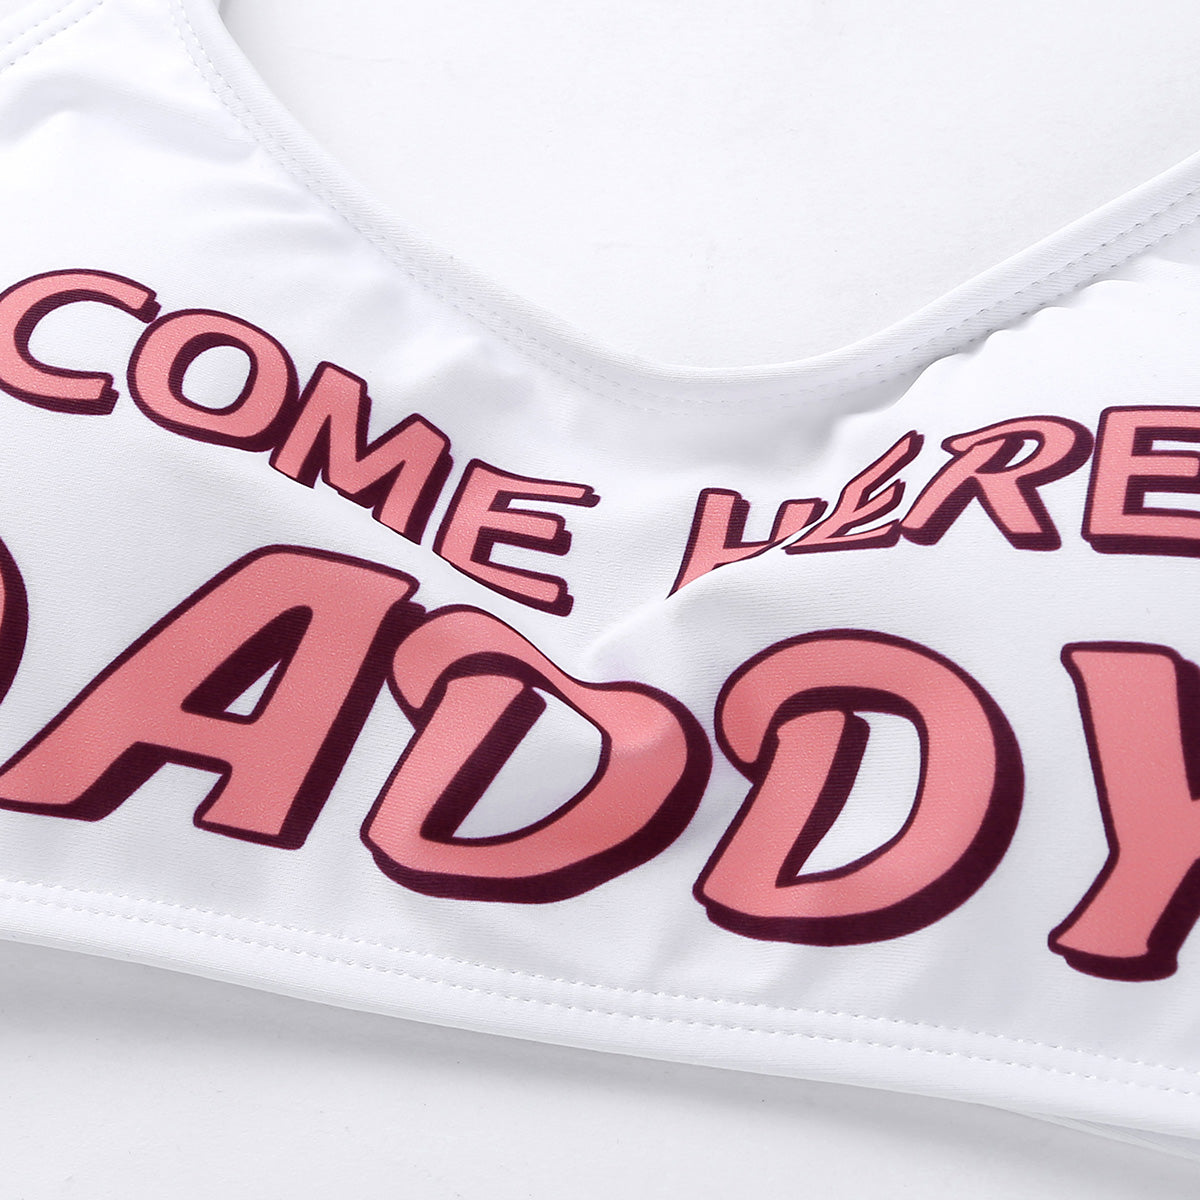 Womens Yes Daddy Printed Sexy Exotic Sets Mini Bra Crop Tops with Briefs Underwear Set Anime Cosplay Costumes Bikini Swimwear